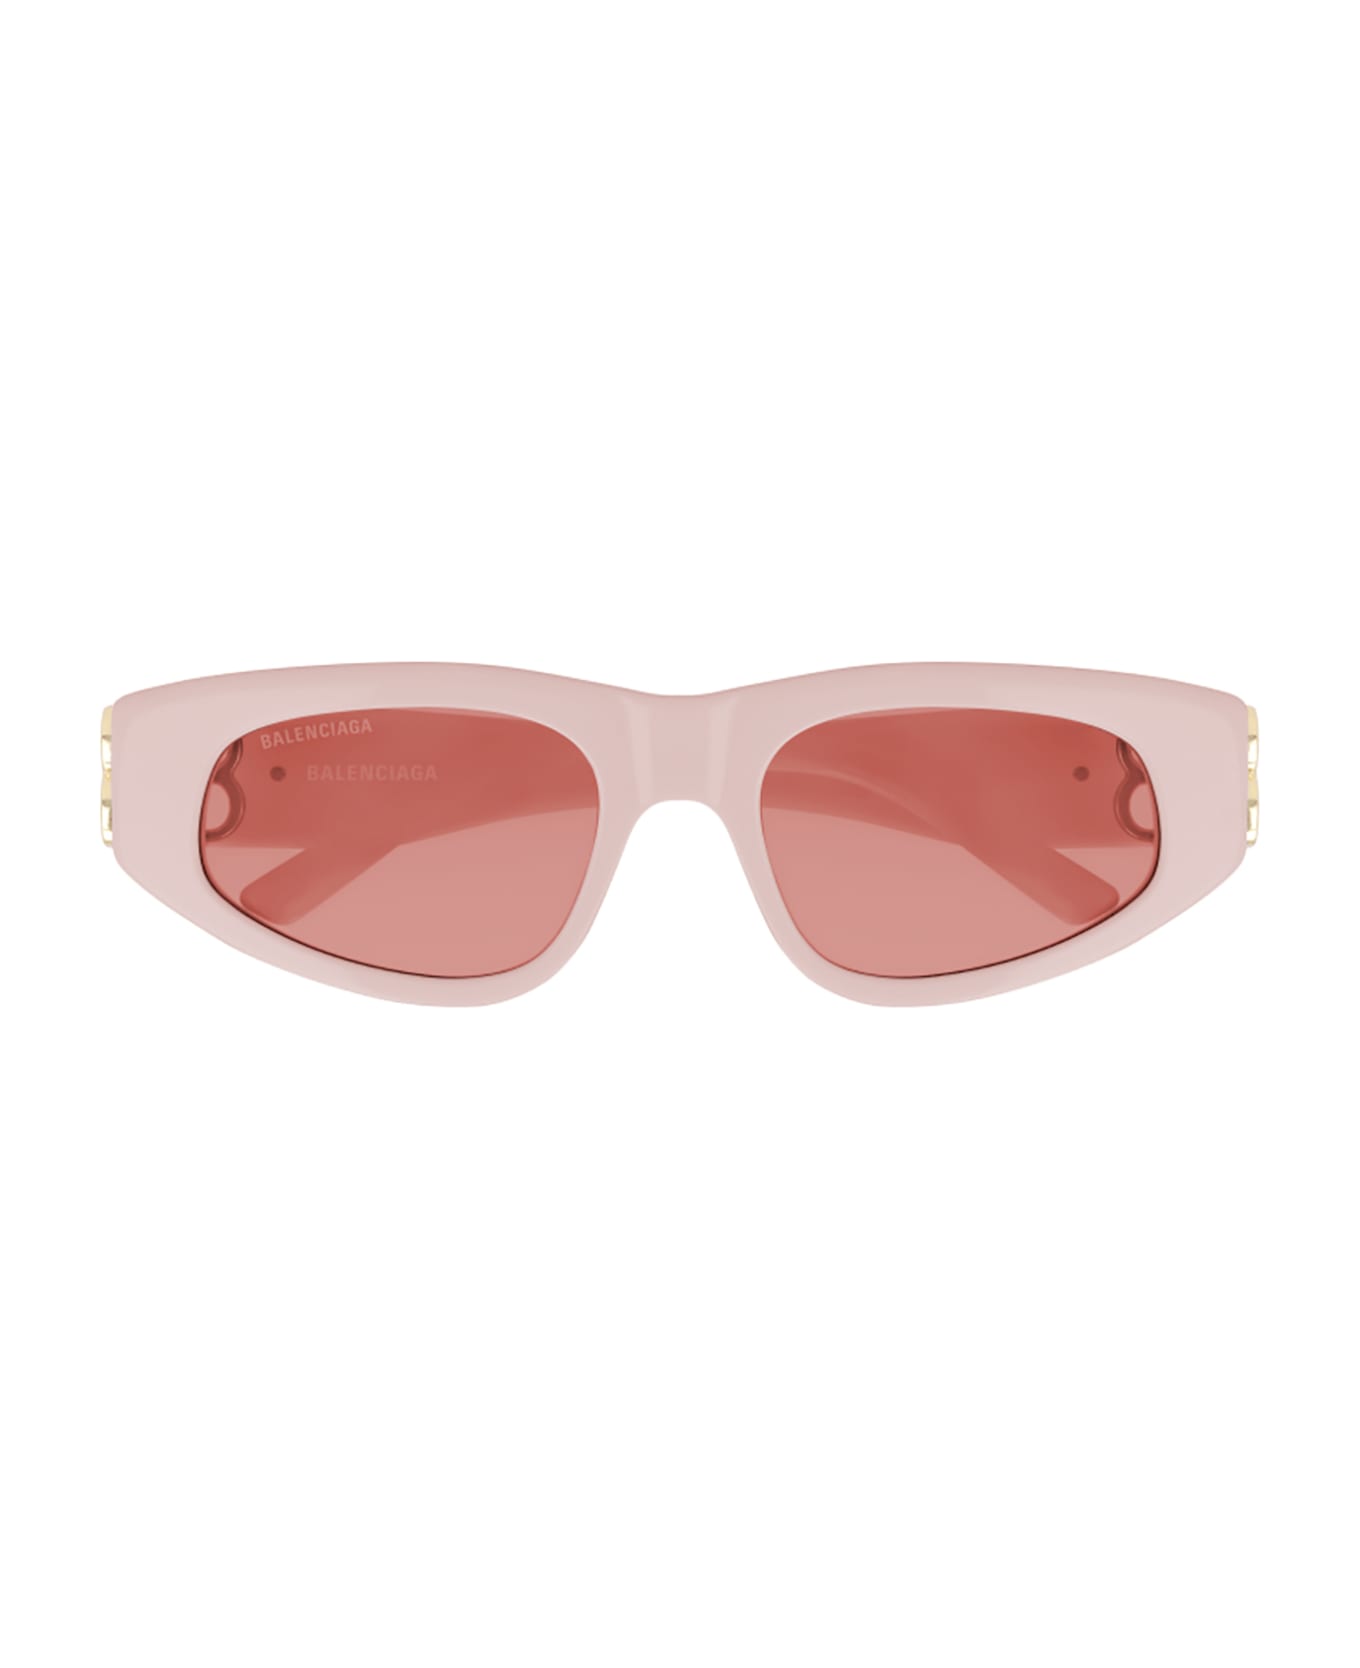 Balenciaga Eyewear BB0095S Sunglasses - Pink Gold Red